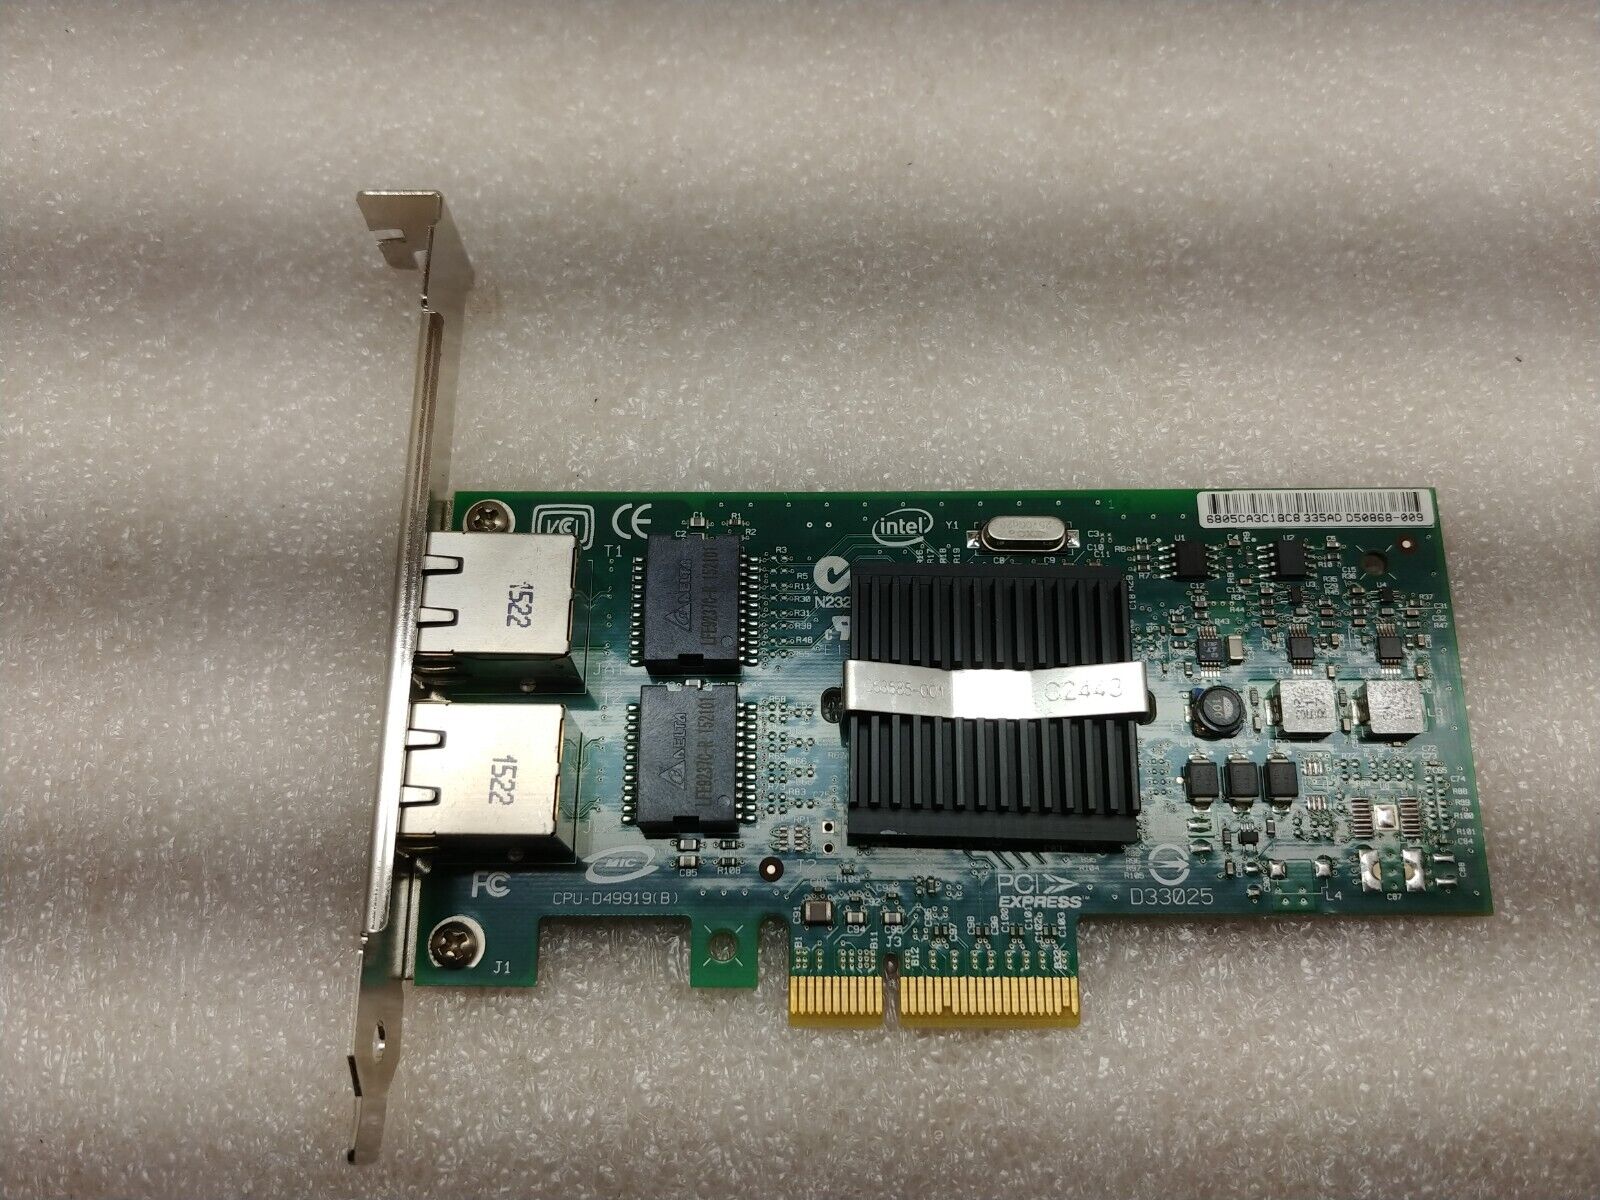 Intel CPU-D49919 (b) Intel PRO/1000 Pt Dual Port Server Adapter Card 